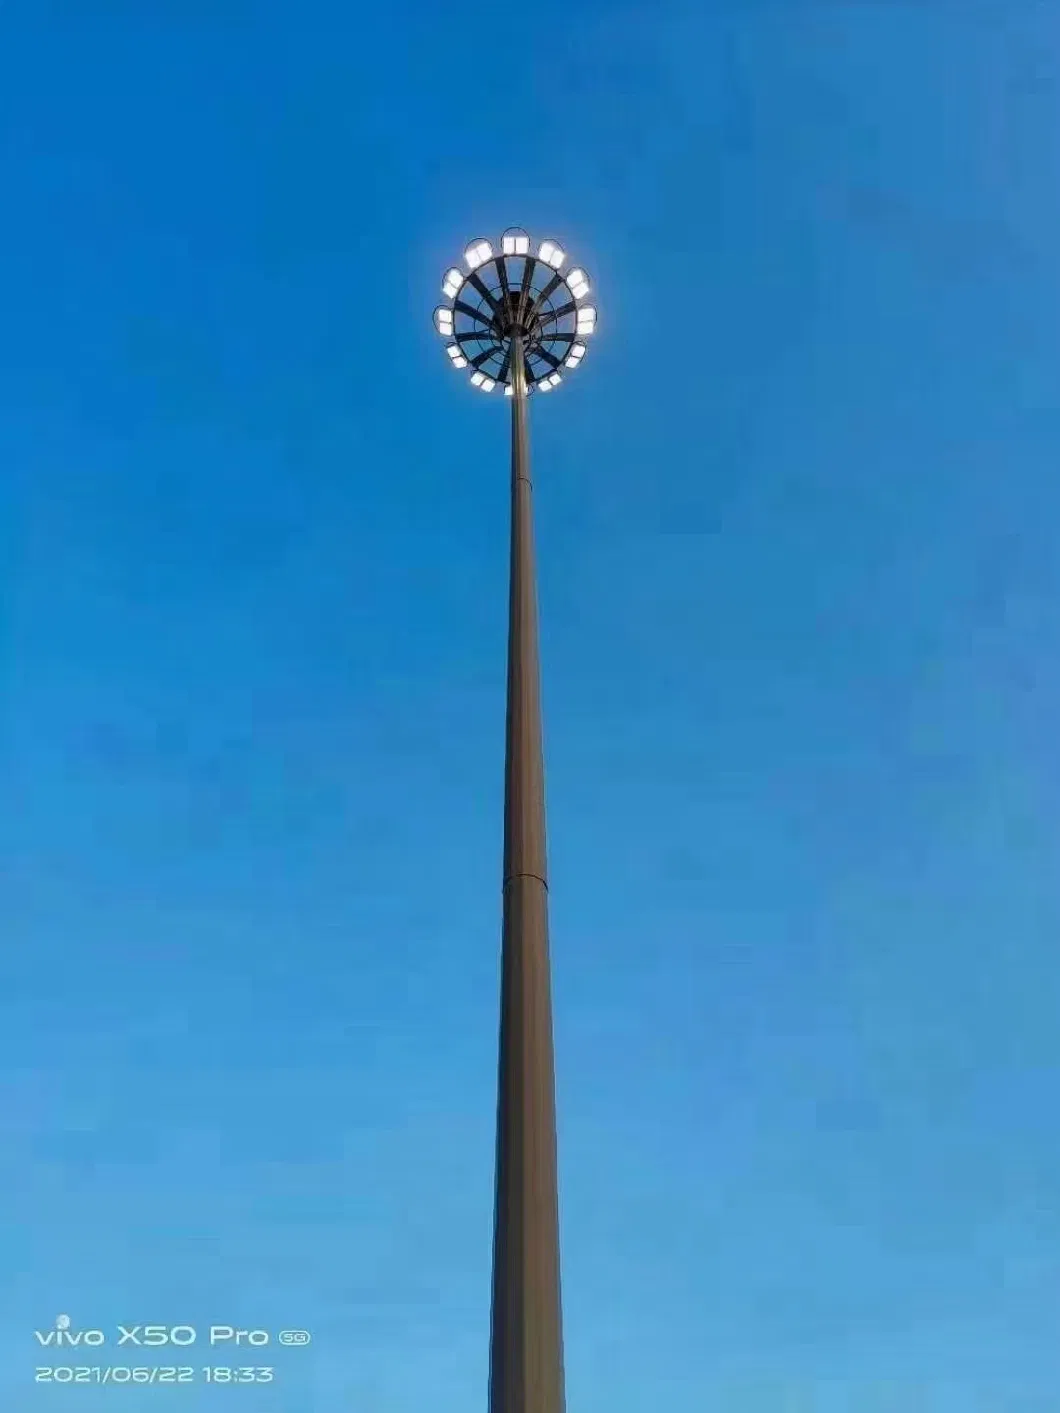 Waterproof High Power Adjustable LED High Mast Flood Light for Outdoor Airport Stadium Lighting